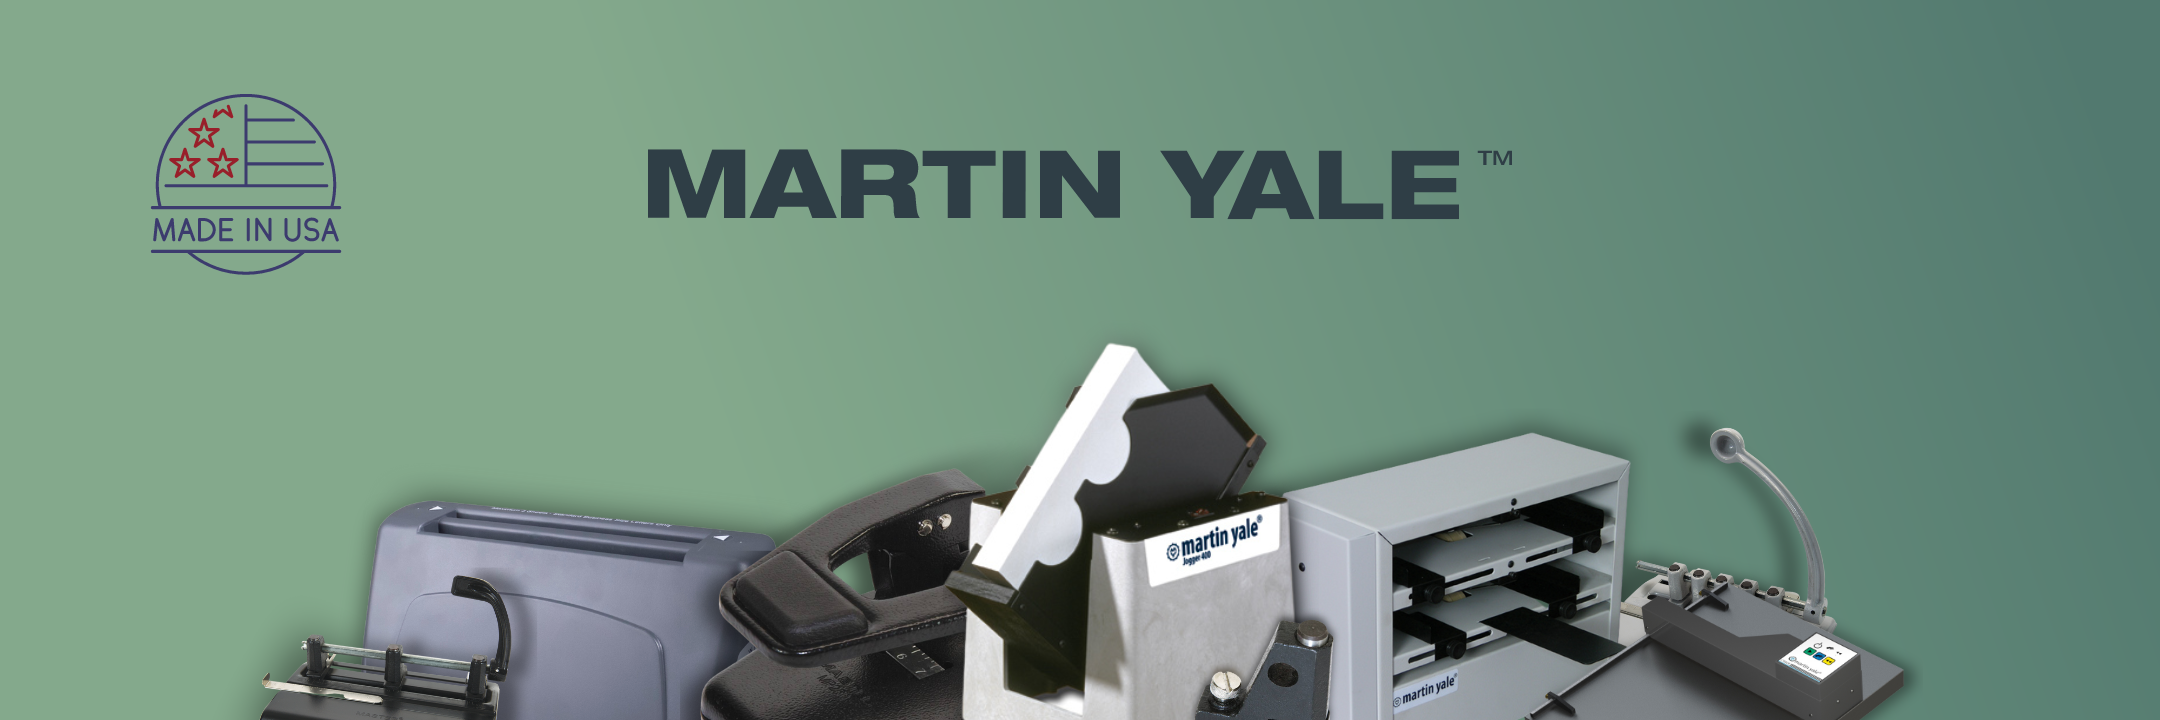 Martin-Yale-Machines-Desktop-Banner-USA